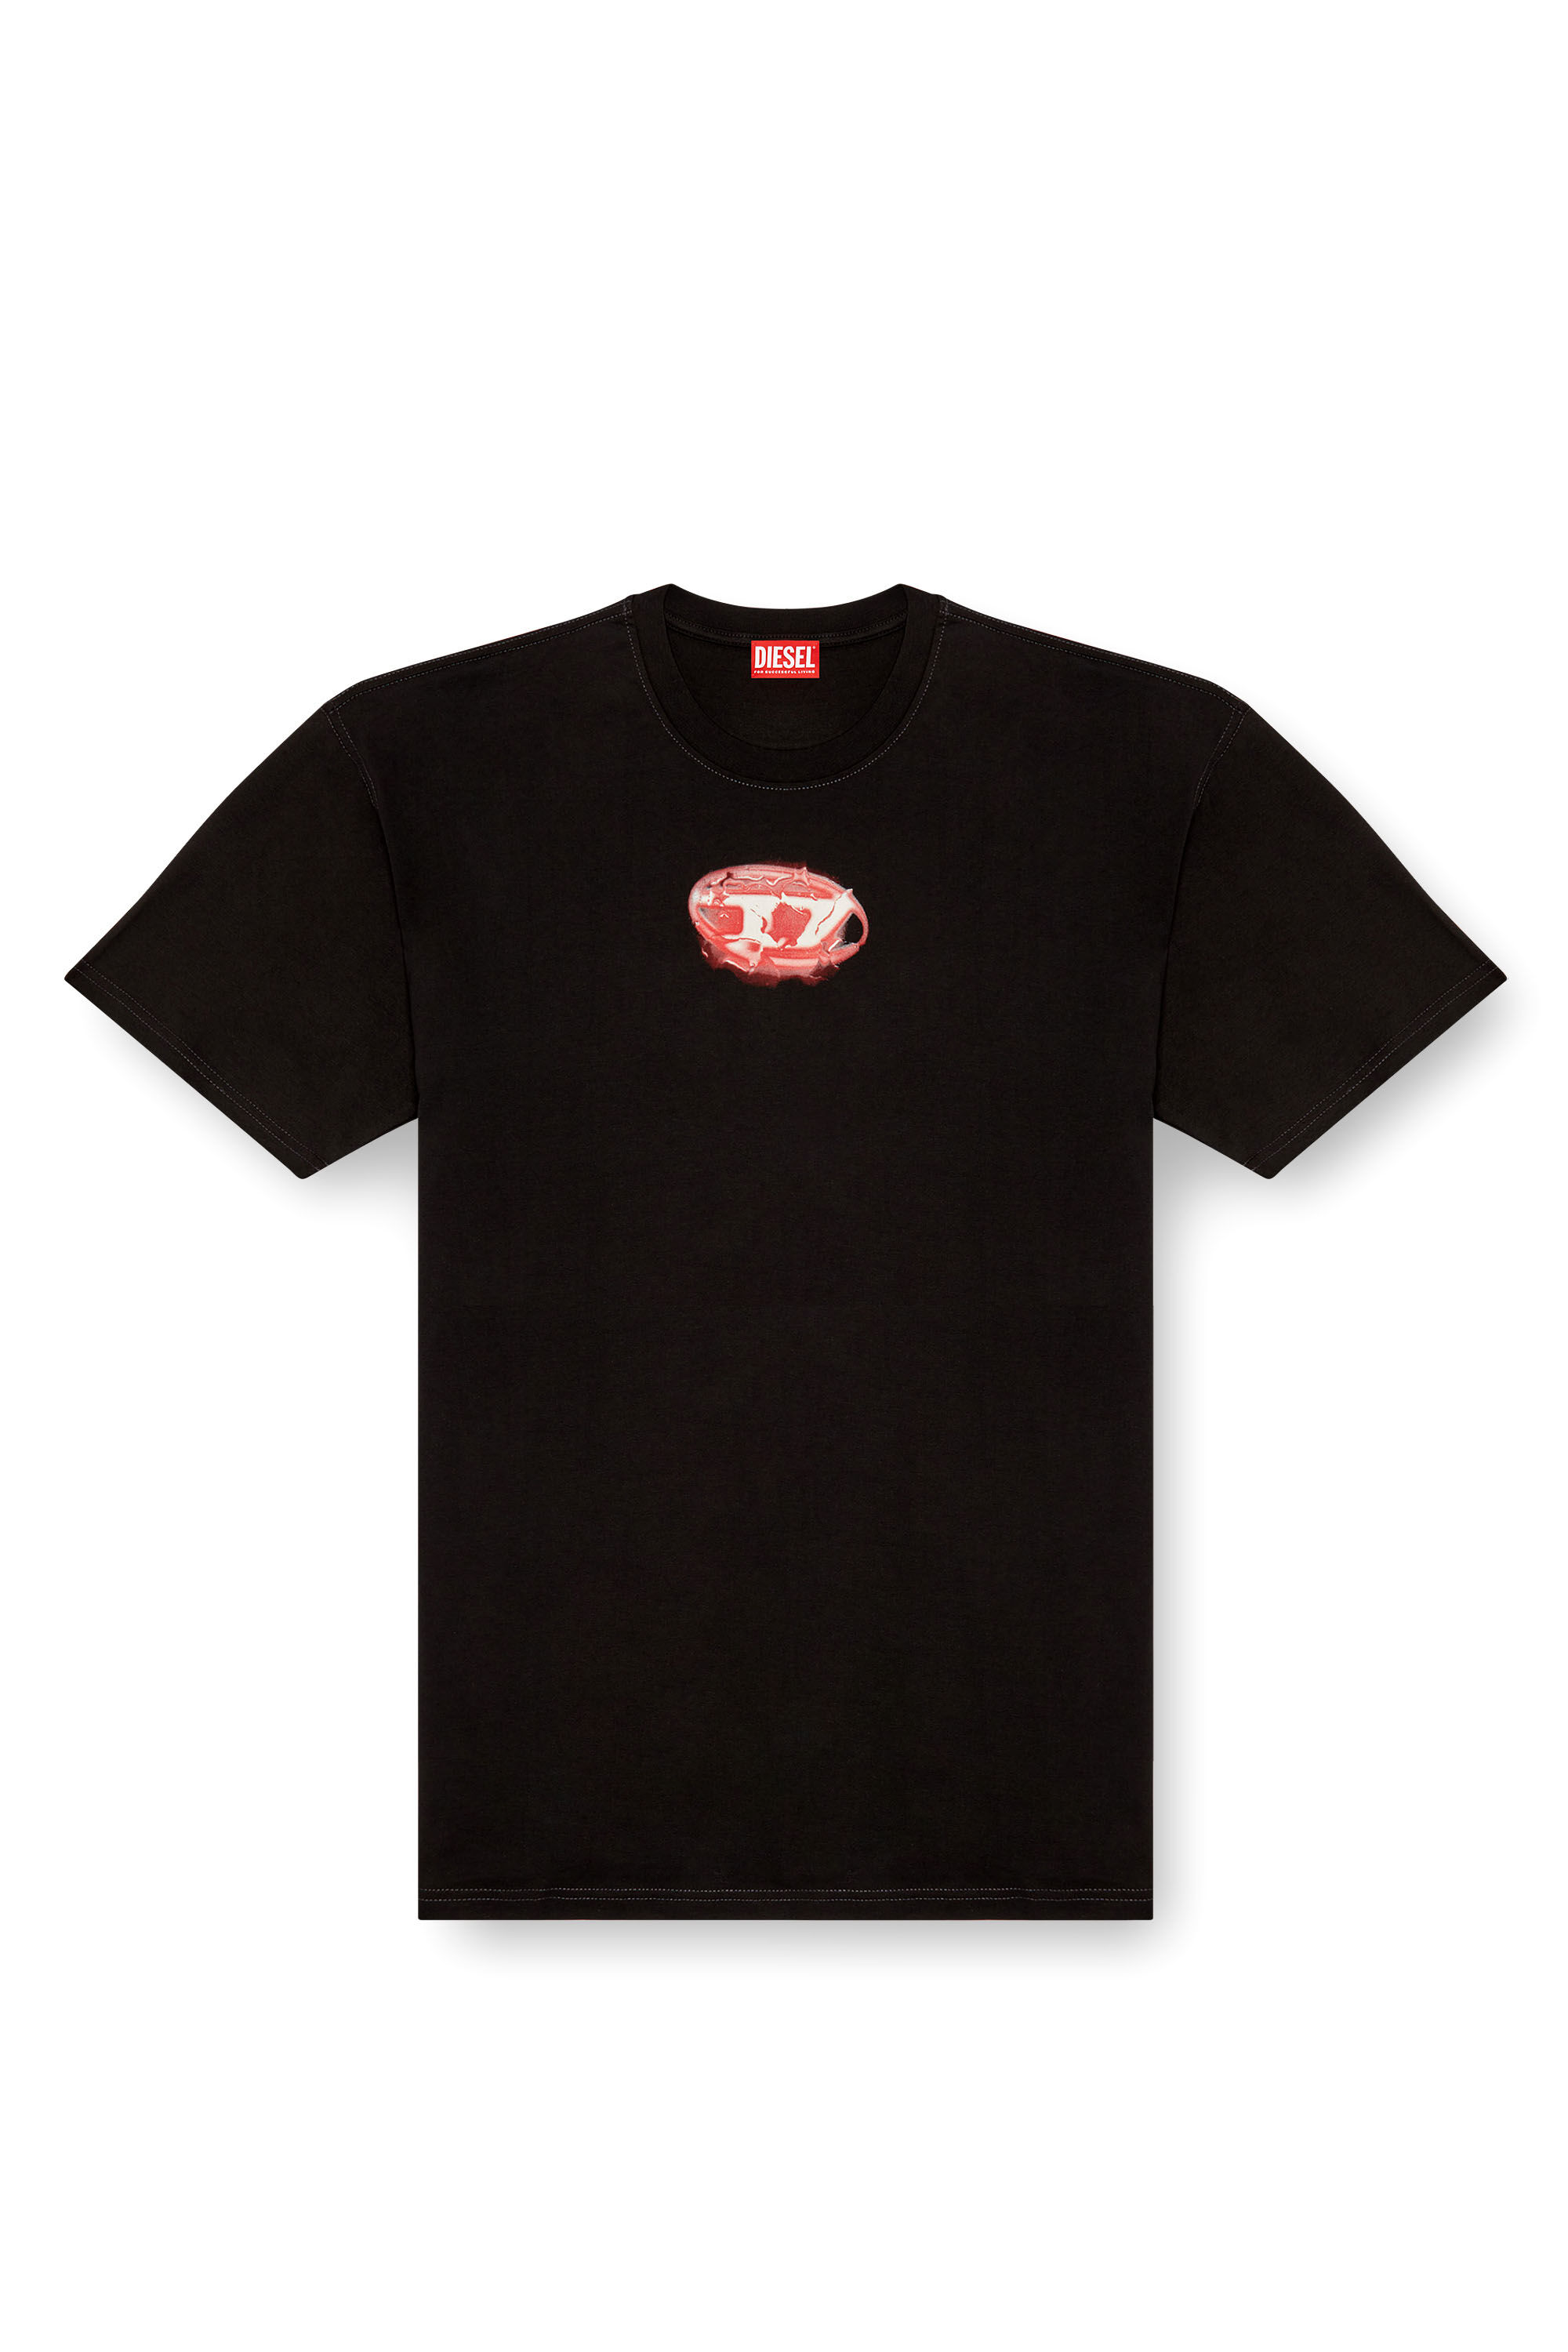 Diesel - T-BOXT-K3, Homme T-shirt avec logo effet lumineux in Noir - Image 2